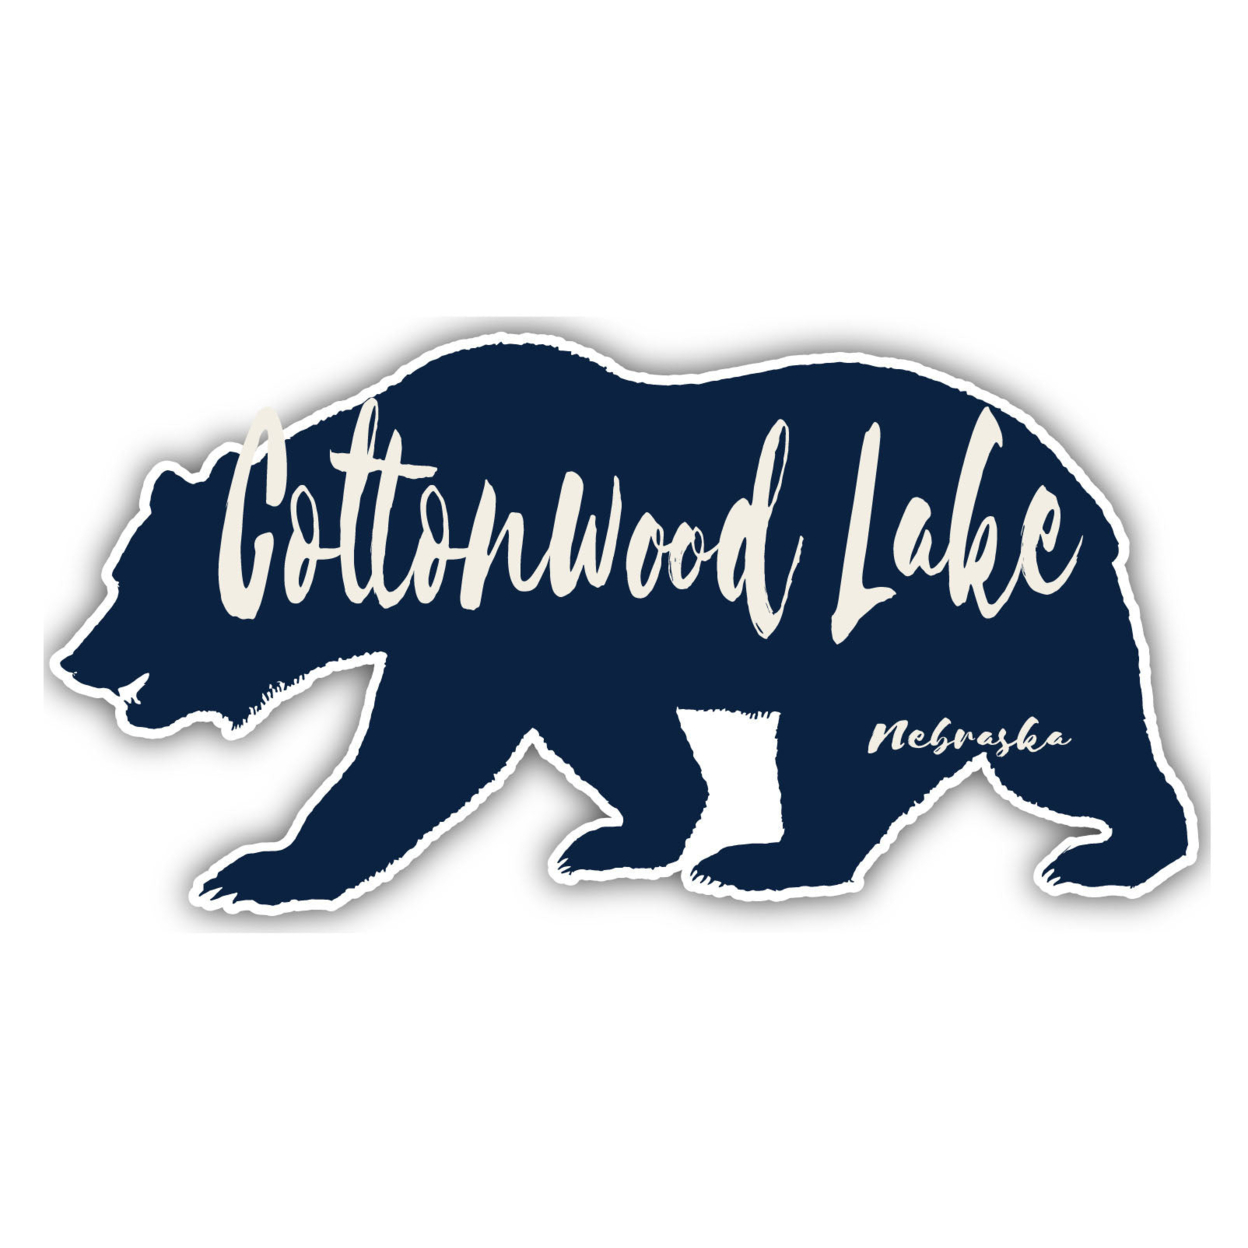 Cottonwood Lake Nebraska Souvenir Decorative Stickers (Choose Theme And Size) - 4-Pack, 12-Inch, Bear